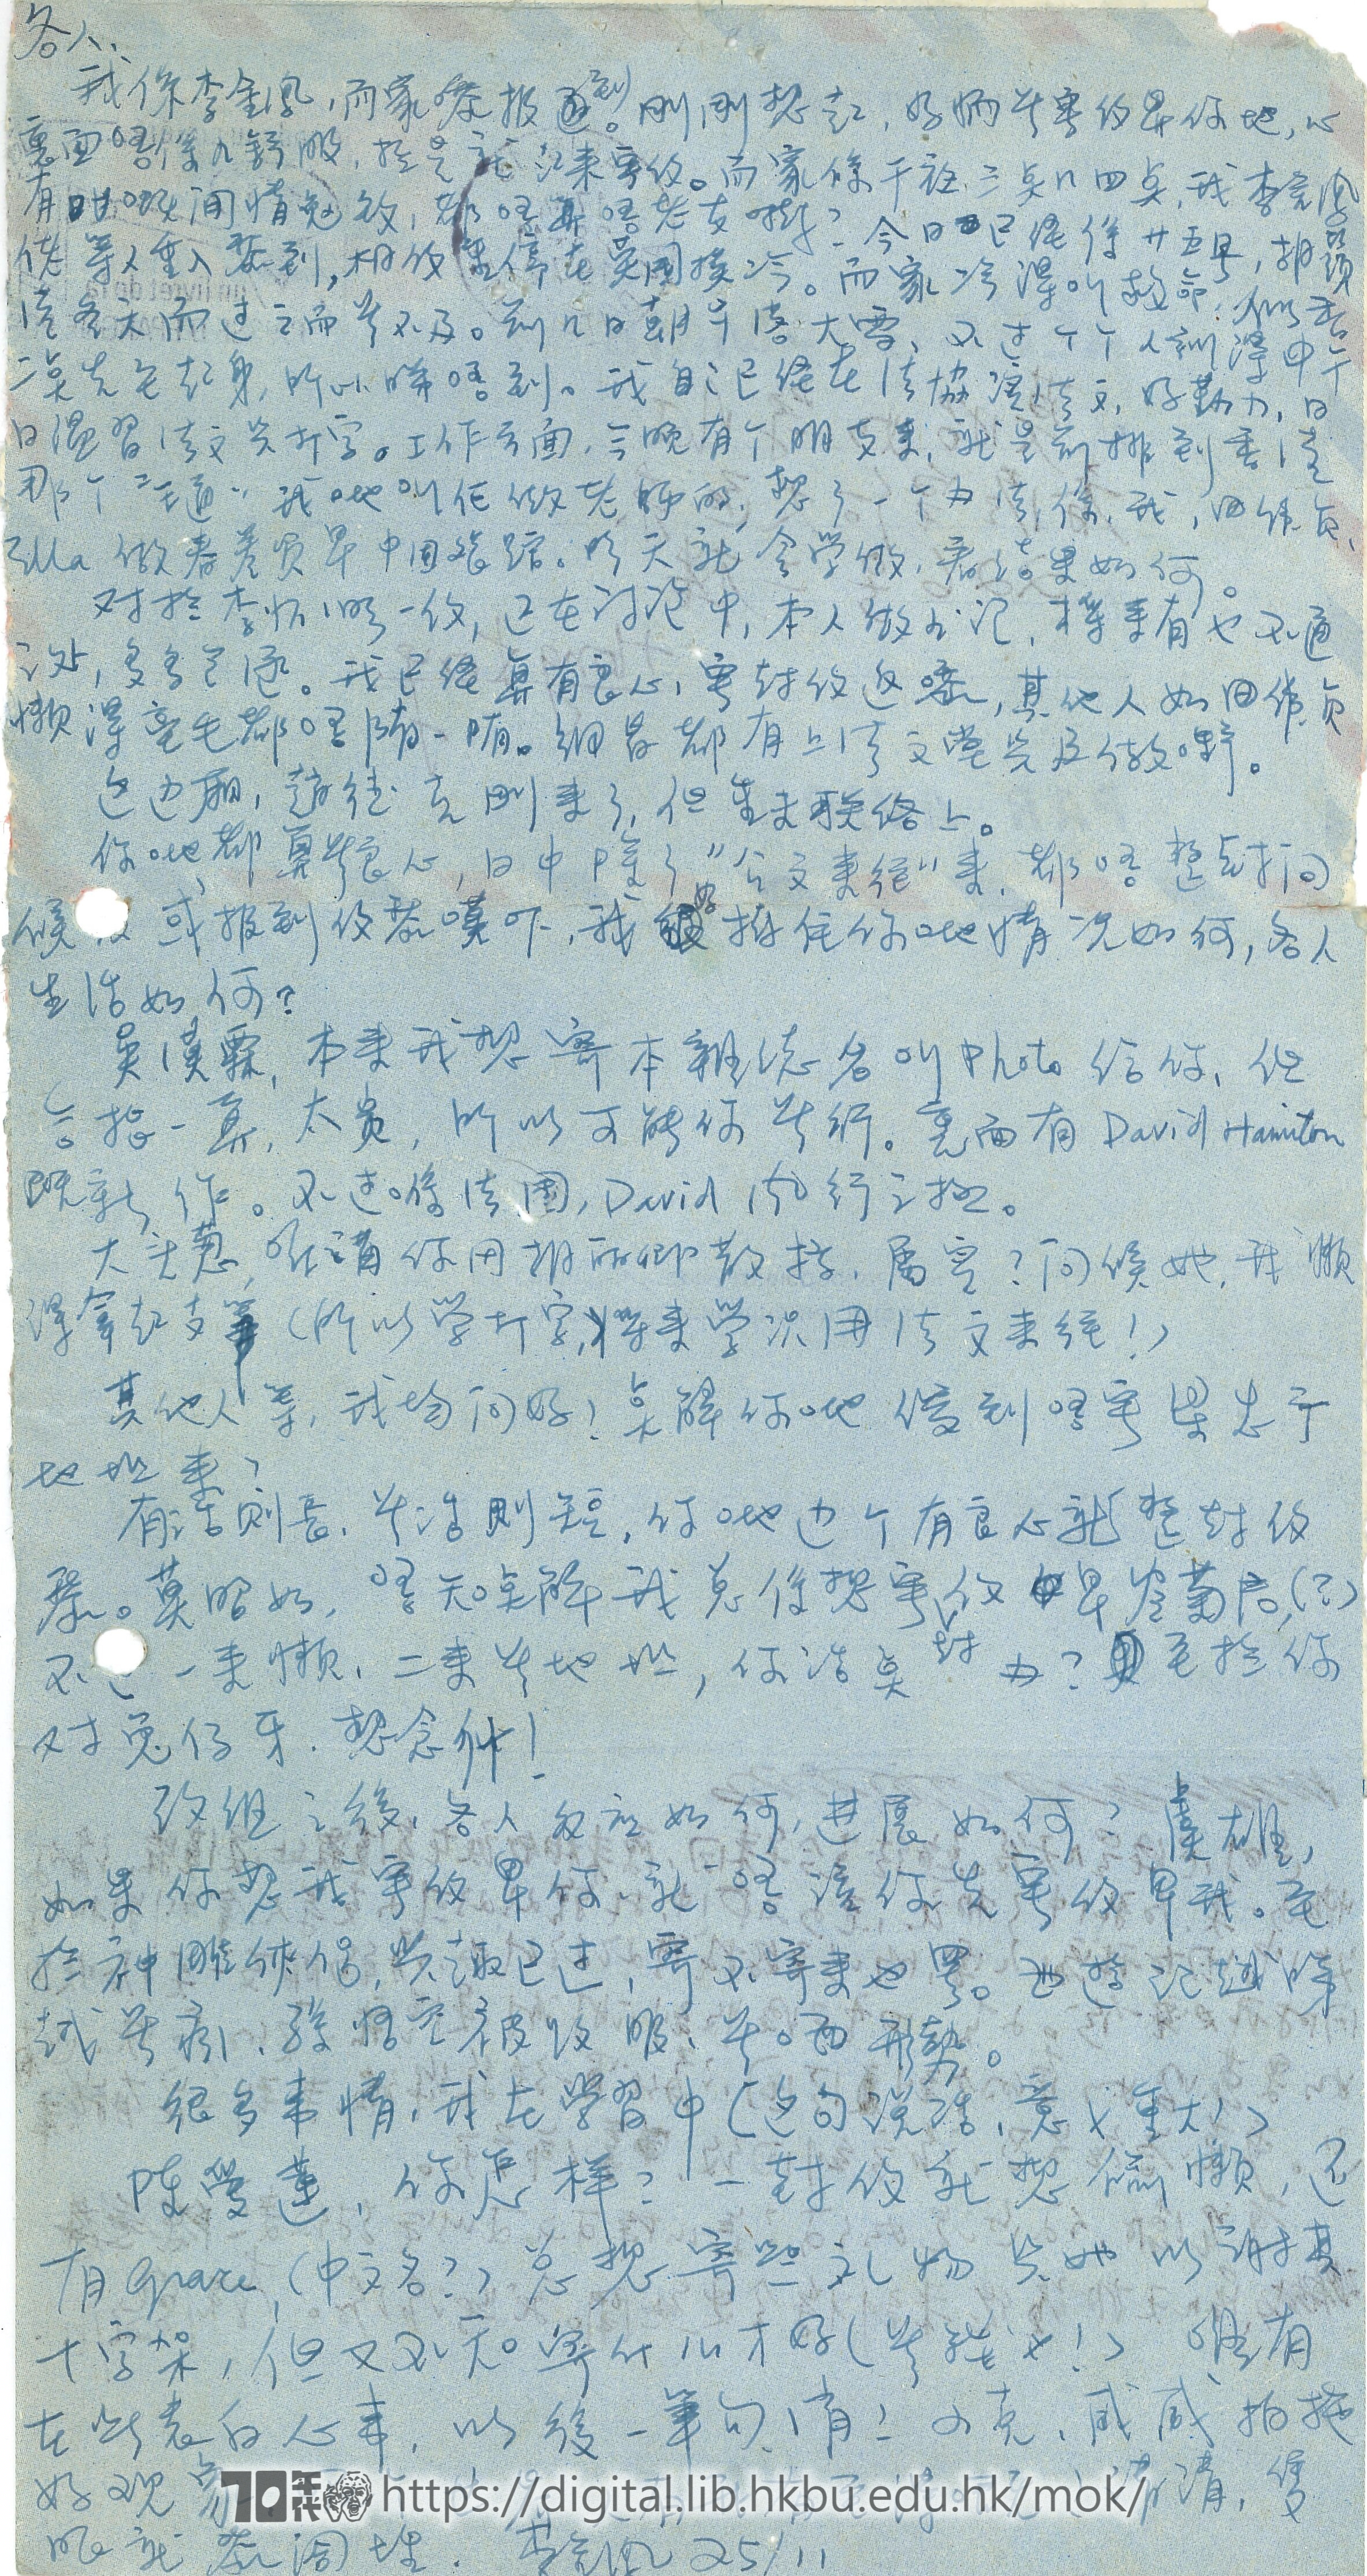   Letter from Lee Kam-fung to Mok Chiu Yu 李美鳳 